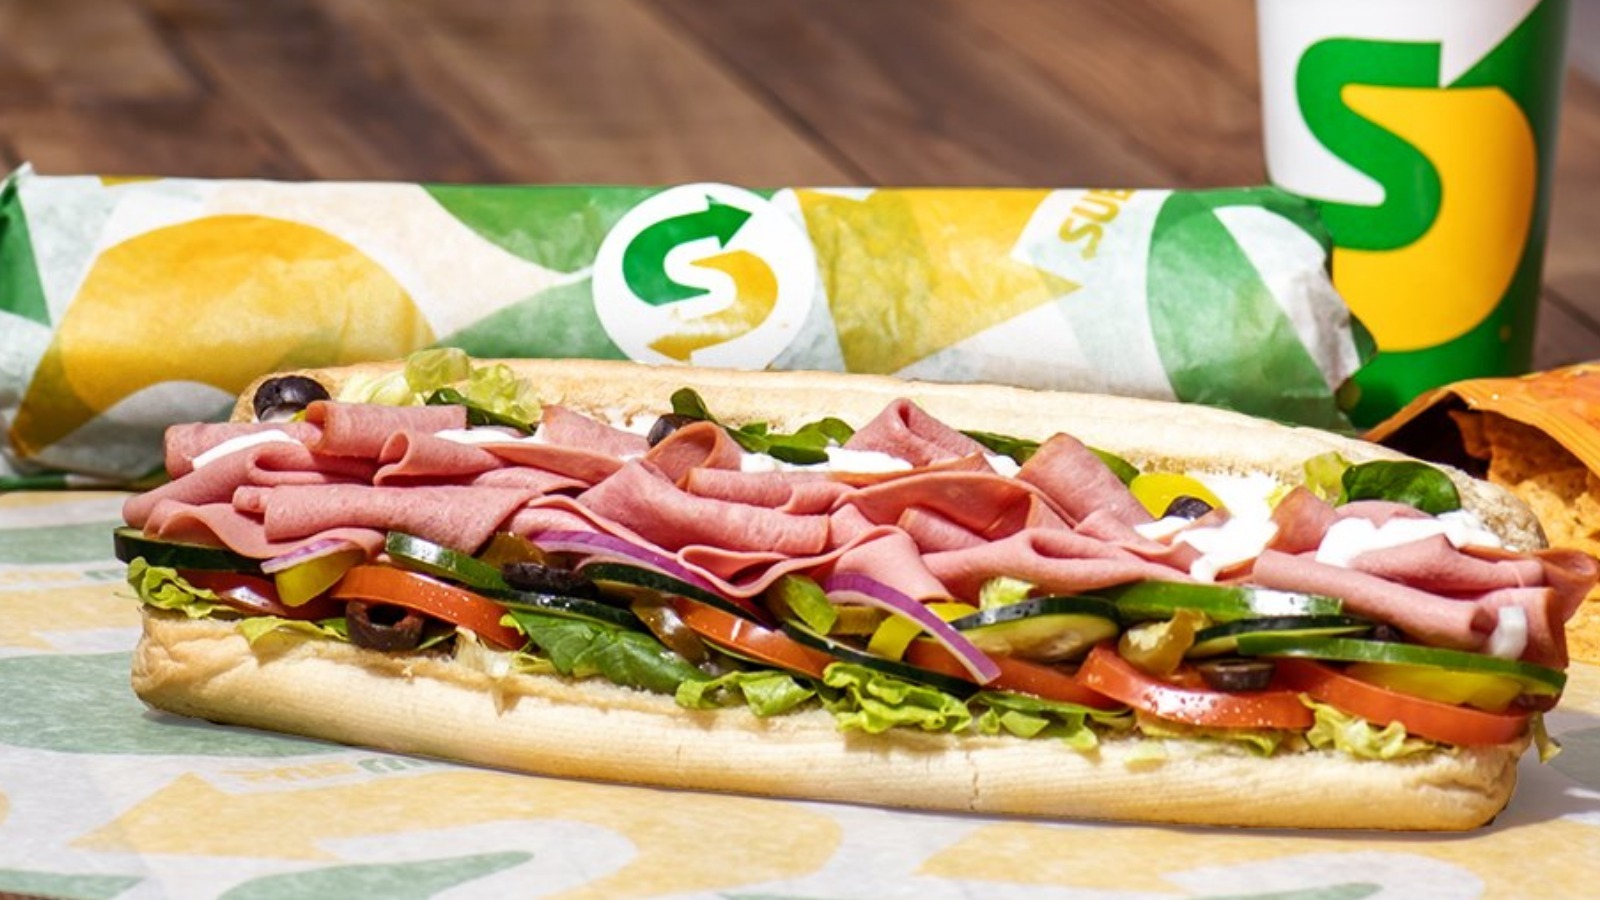 The Best Subway Coupons – BOGO FREE Subway Footlong Sandwiches